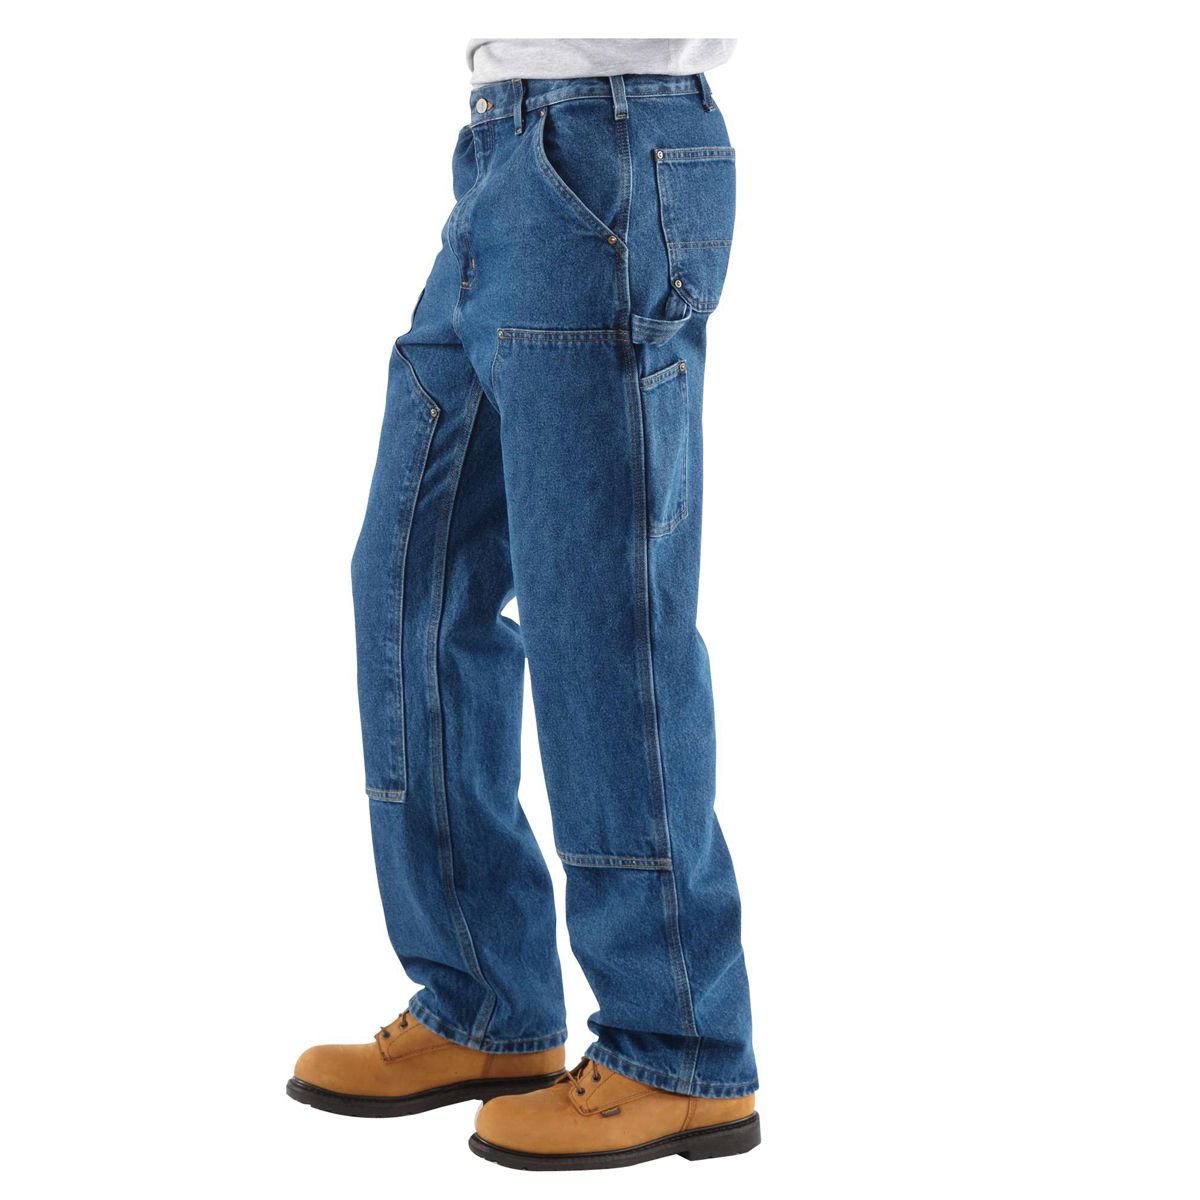 Carhartt B73-DST-33X34 Utility Logger Jeans, 33 in Waist, 34 in L Inseam, Darkstone, Loose Fit - 8